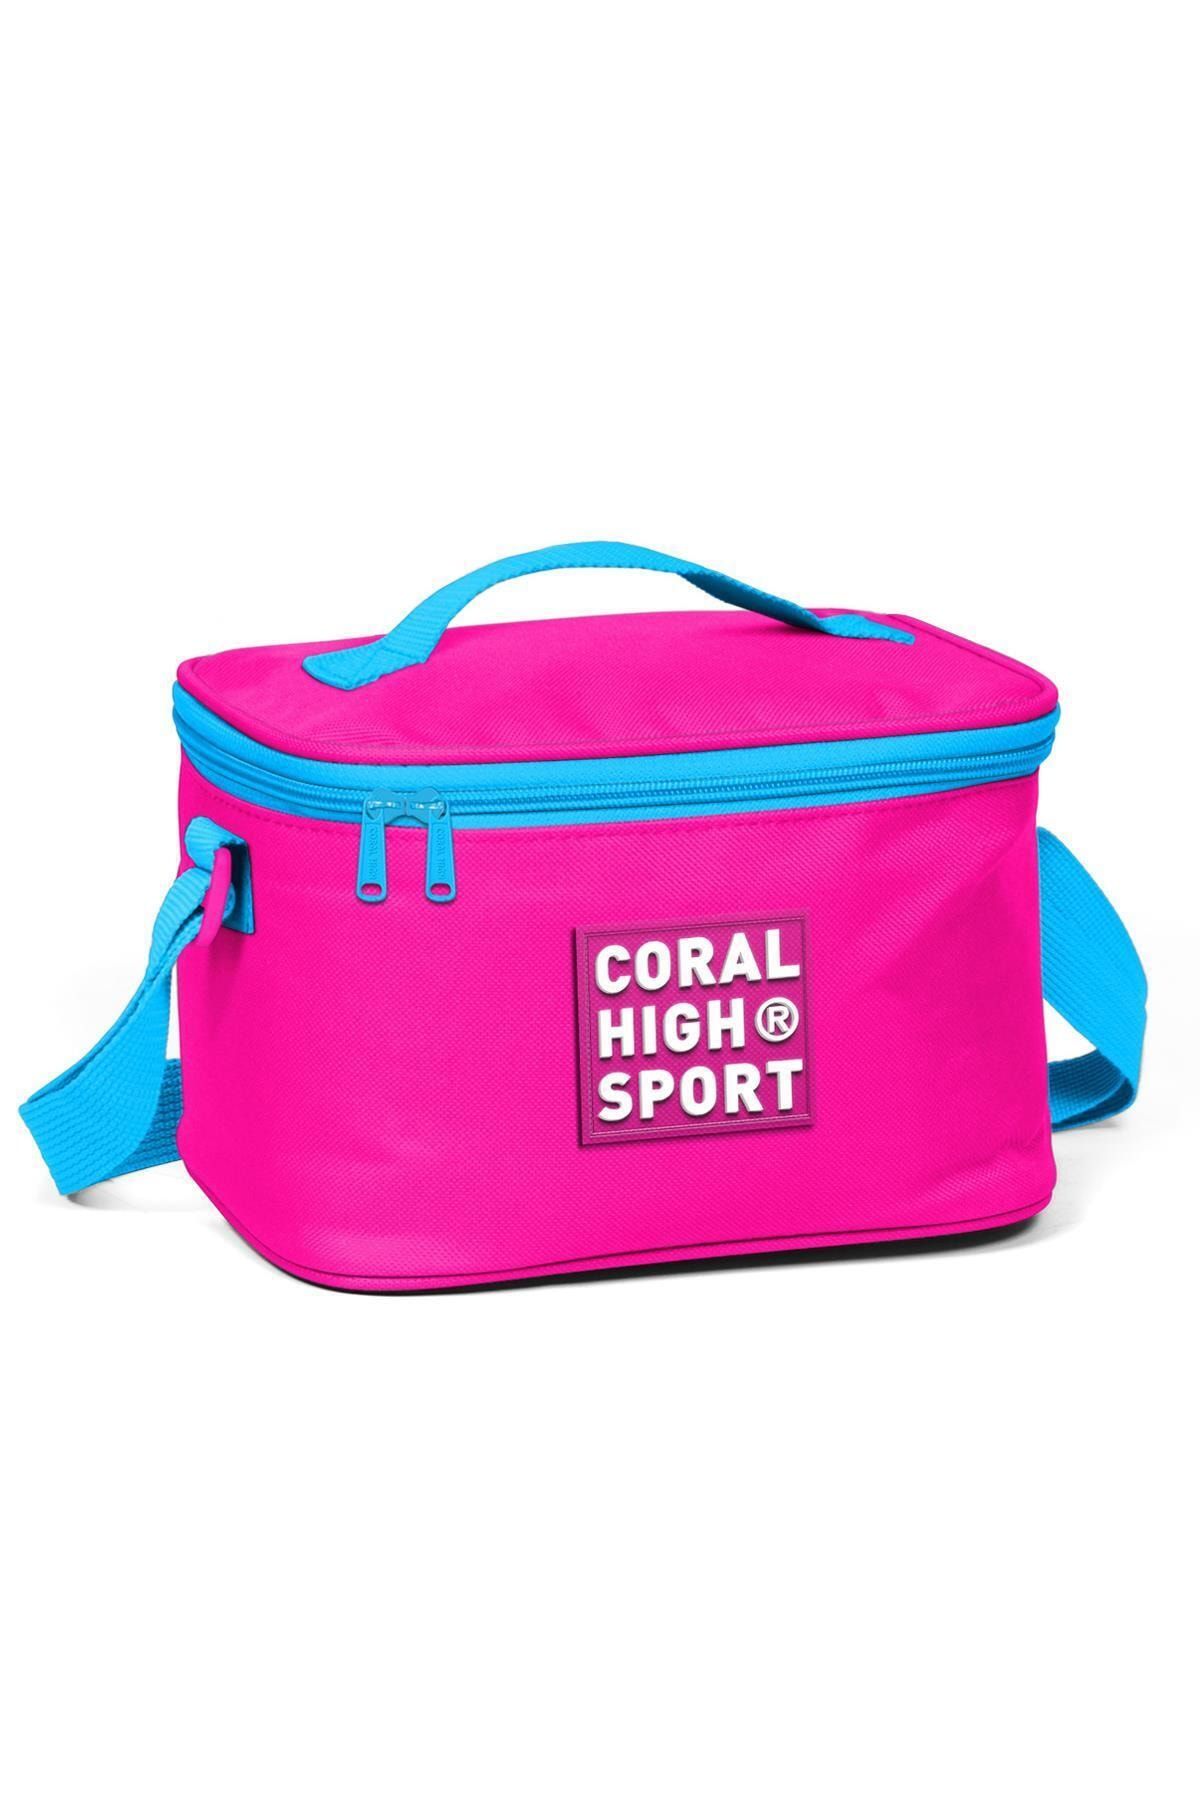 Coral High Neon Pembe Thermo Beslenme Çantası